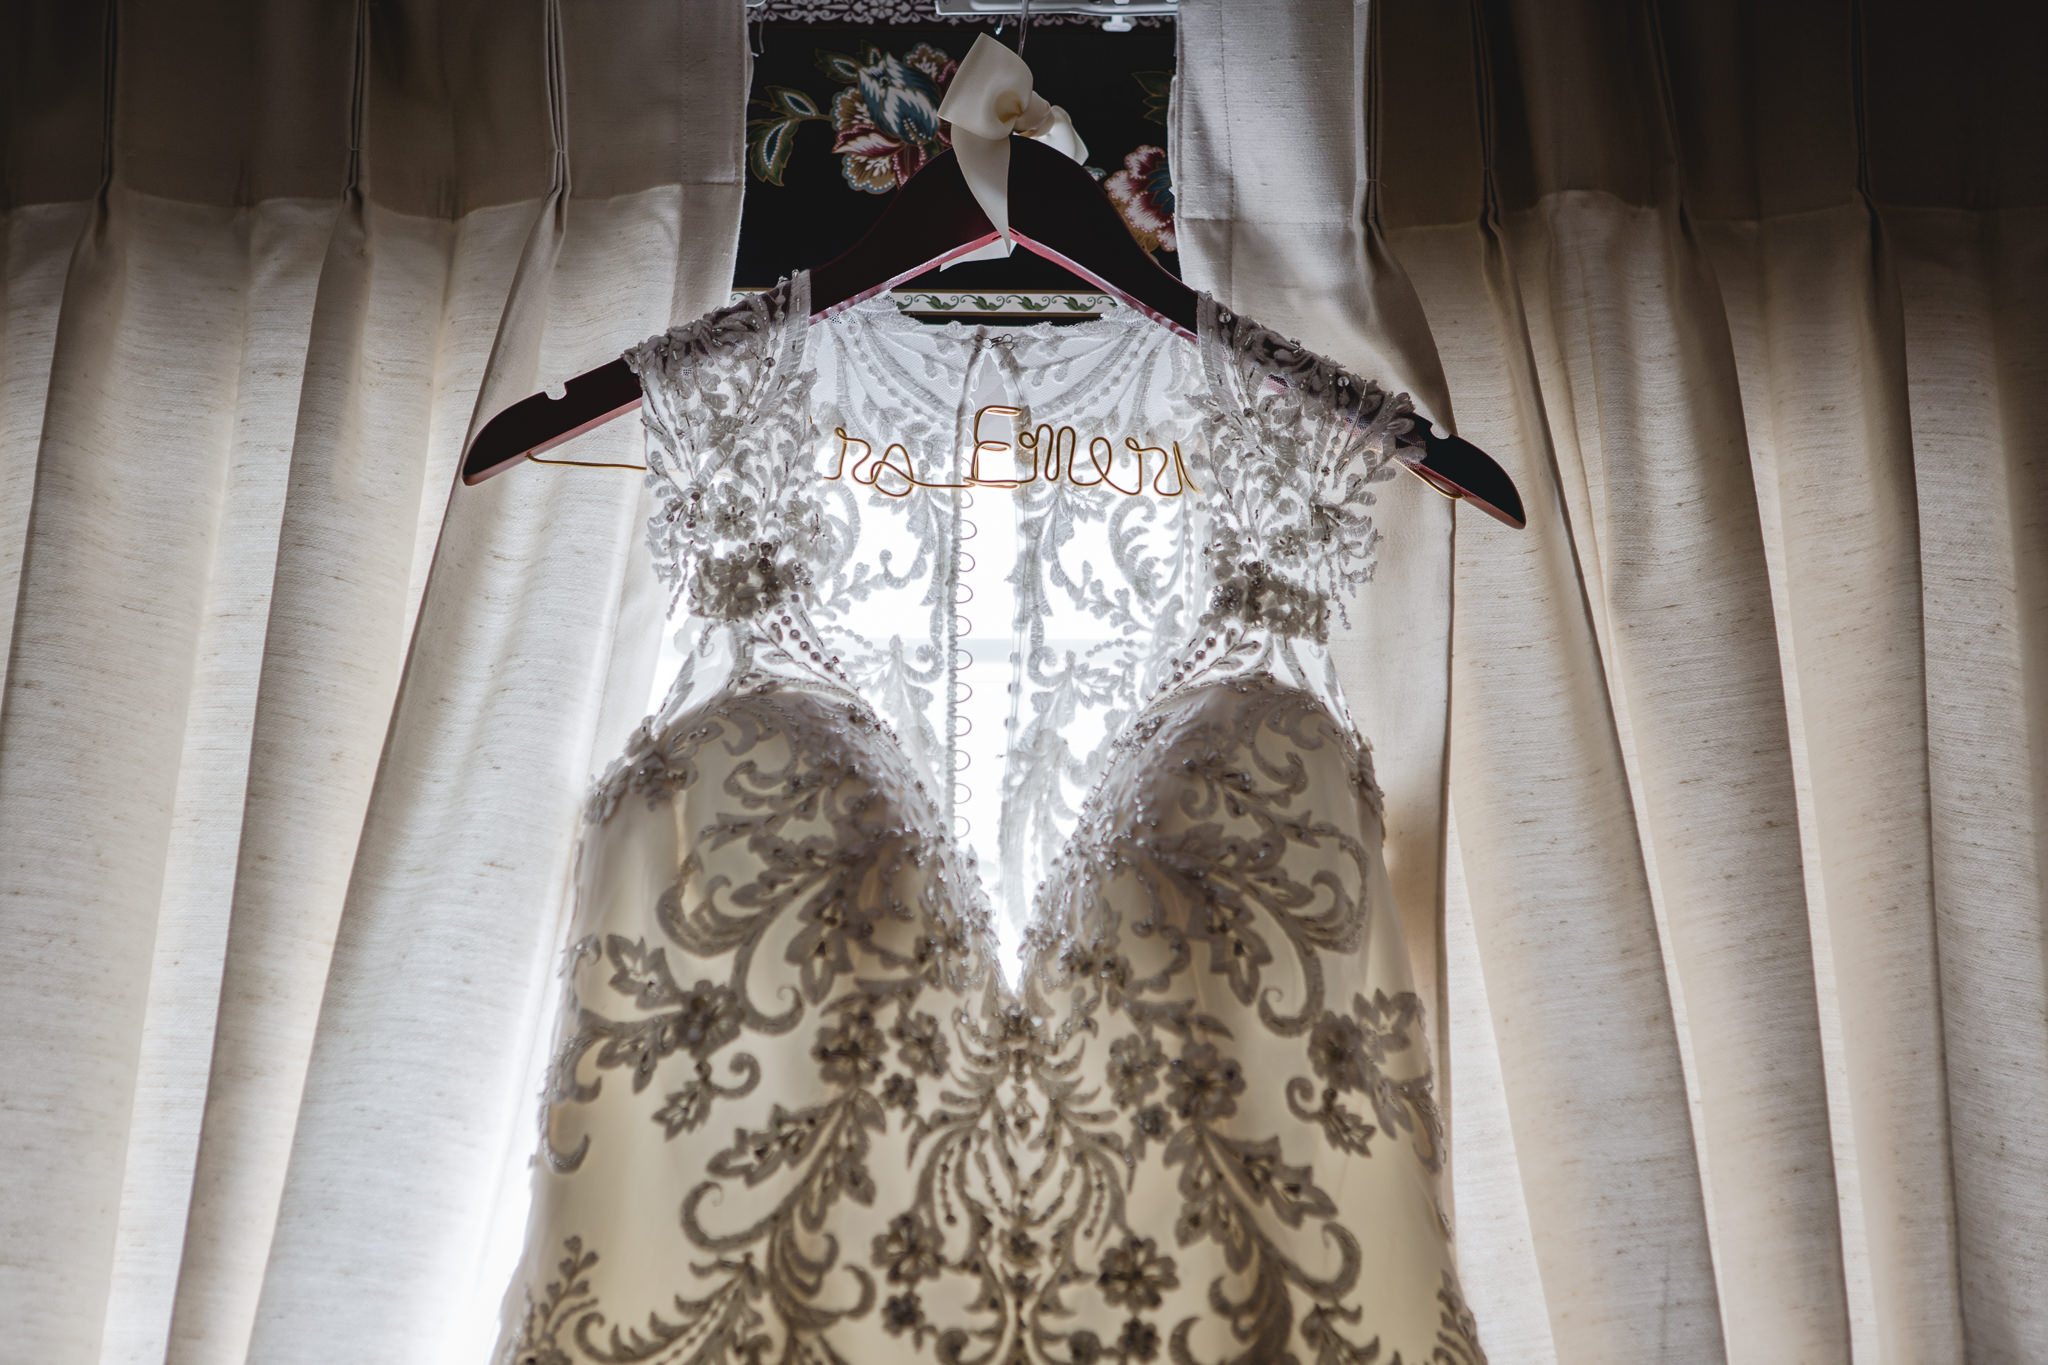 Lace detailed wedding dress hangs on a custom hanger